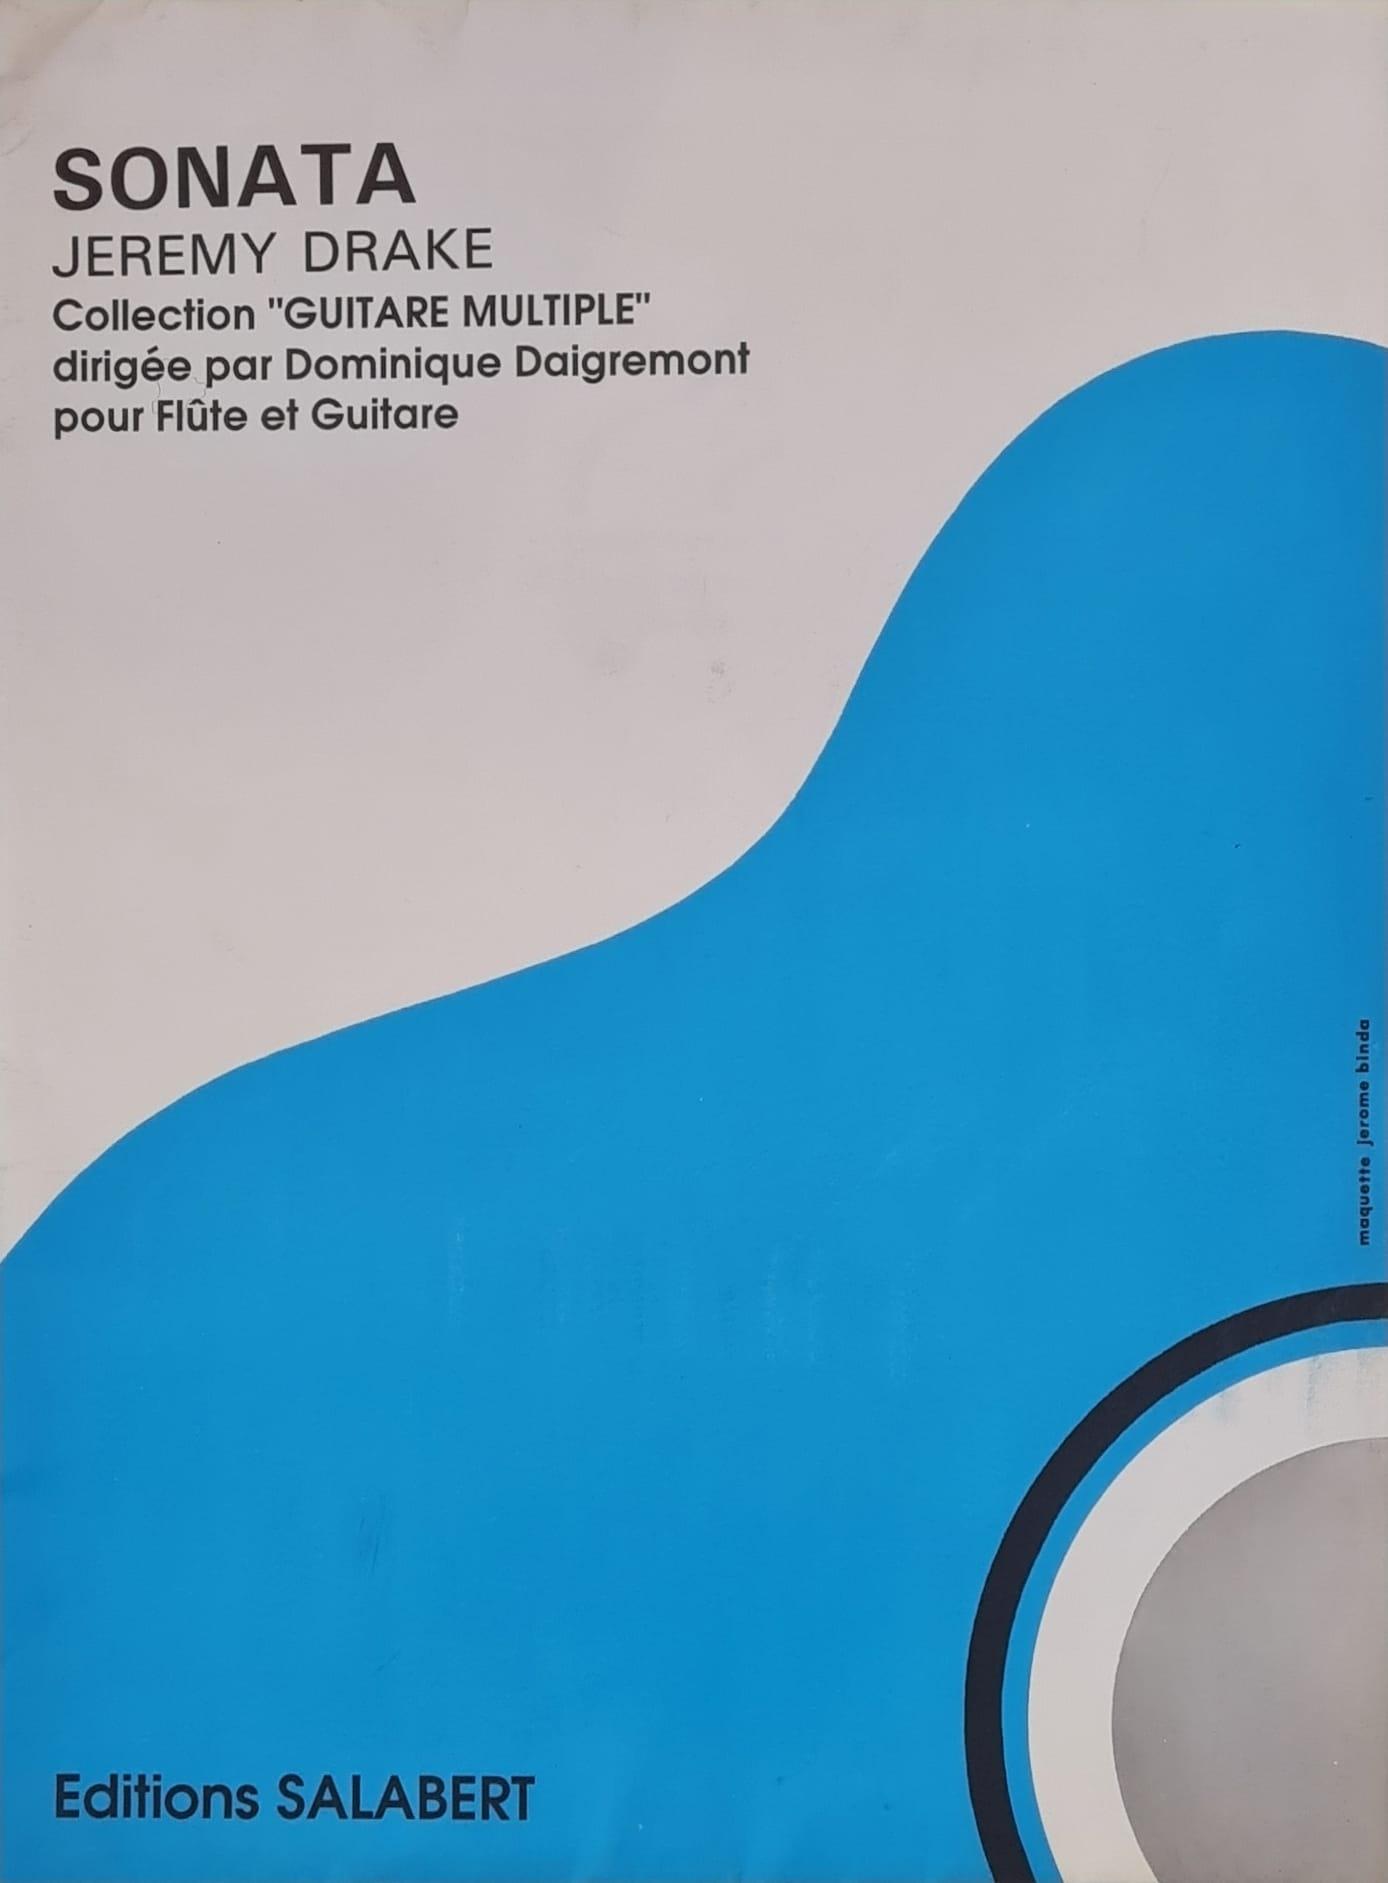 Sonata Flute Et Guitare  -  Jeremy Drake | Suono Flauti